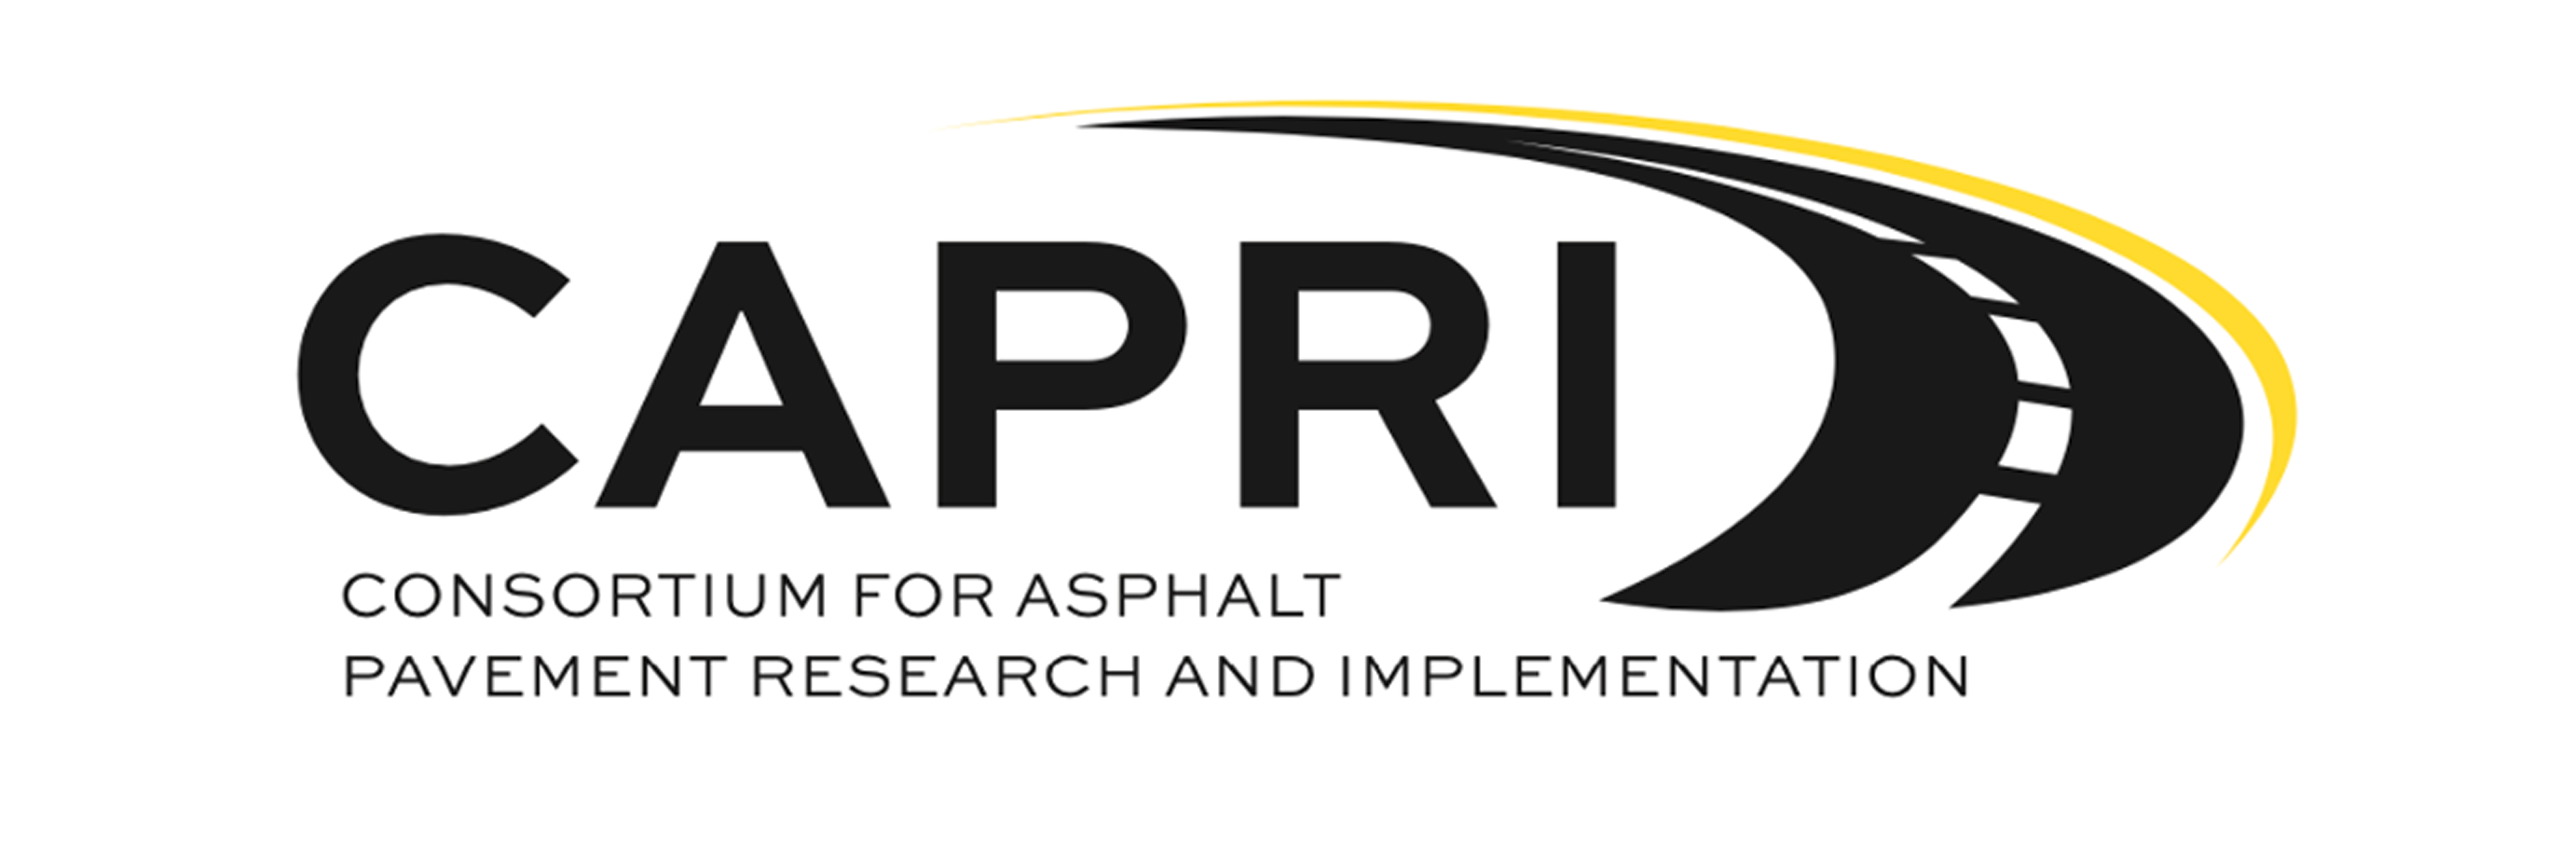 Visit the new CAPRI website